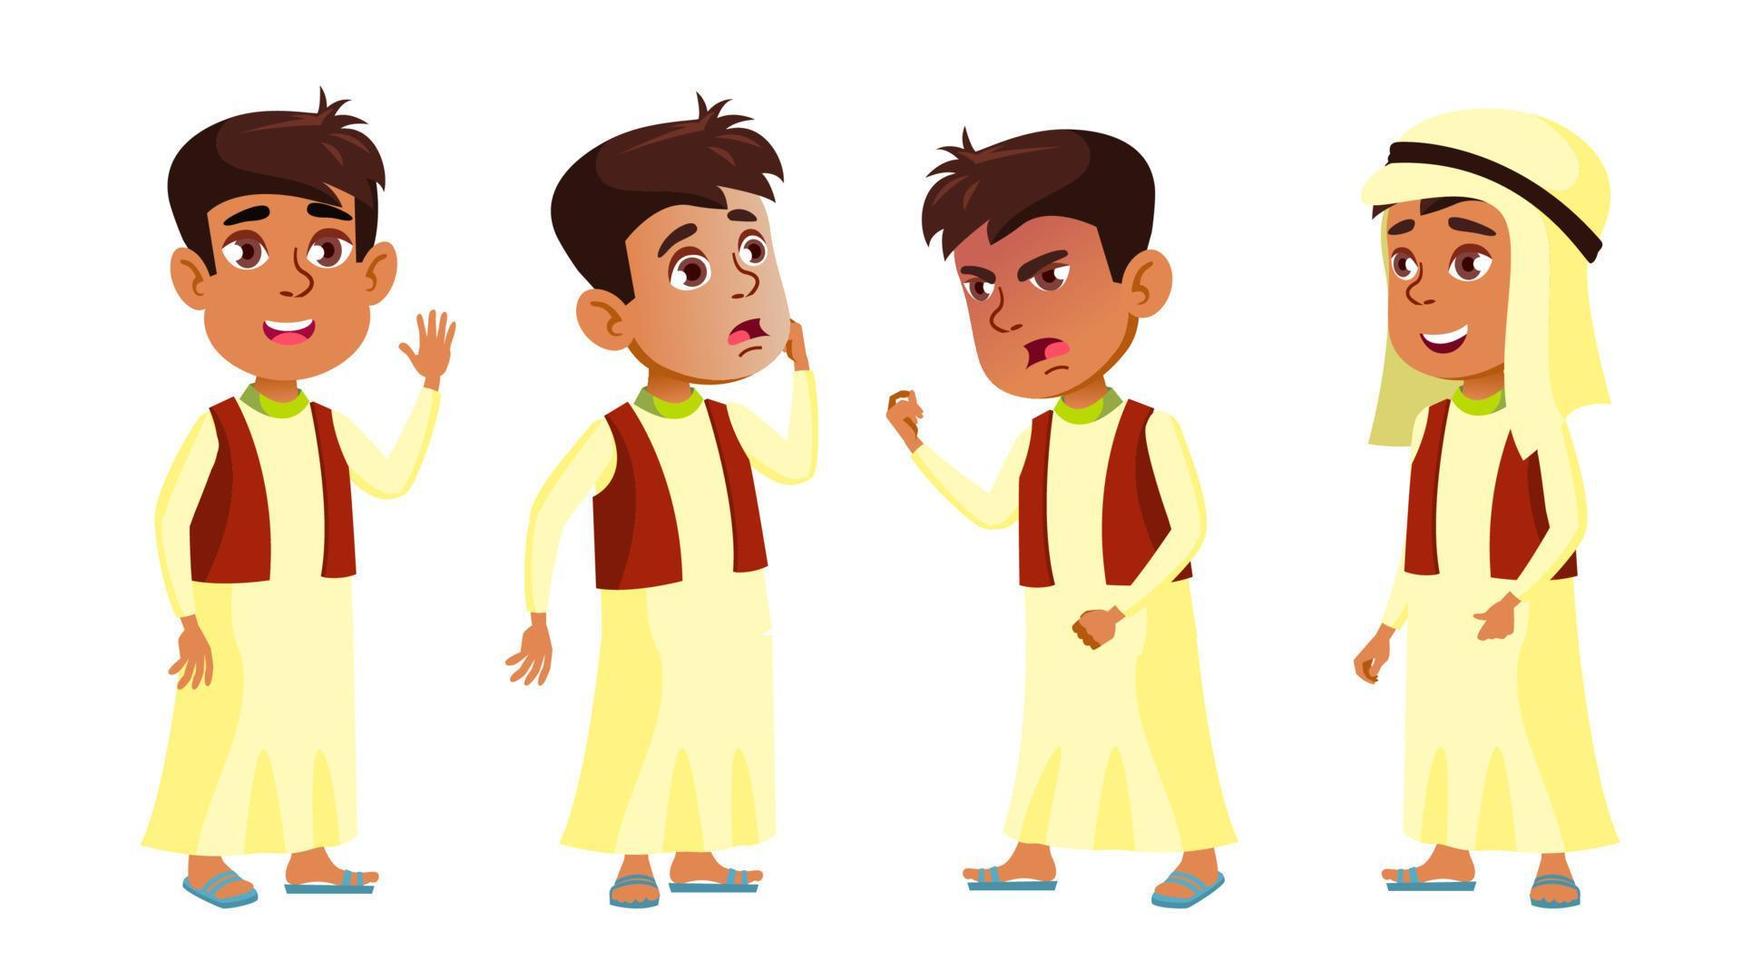 Arab, Muslim Boy Schoolboy Kid Poses Set Vector. Primary School Child. Little Kid. Face. For Postcard, Cover, Placard Design. Isolated Cartoon Illustration vector